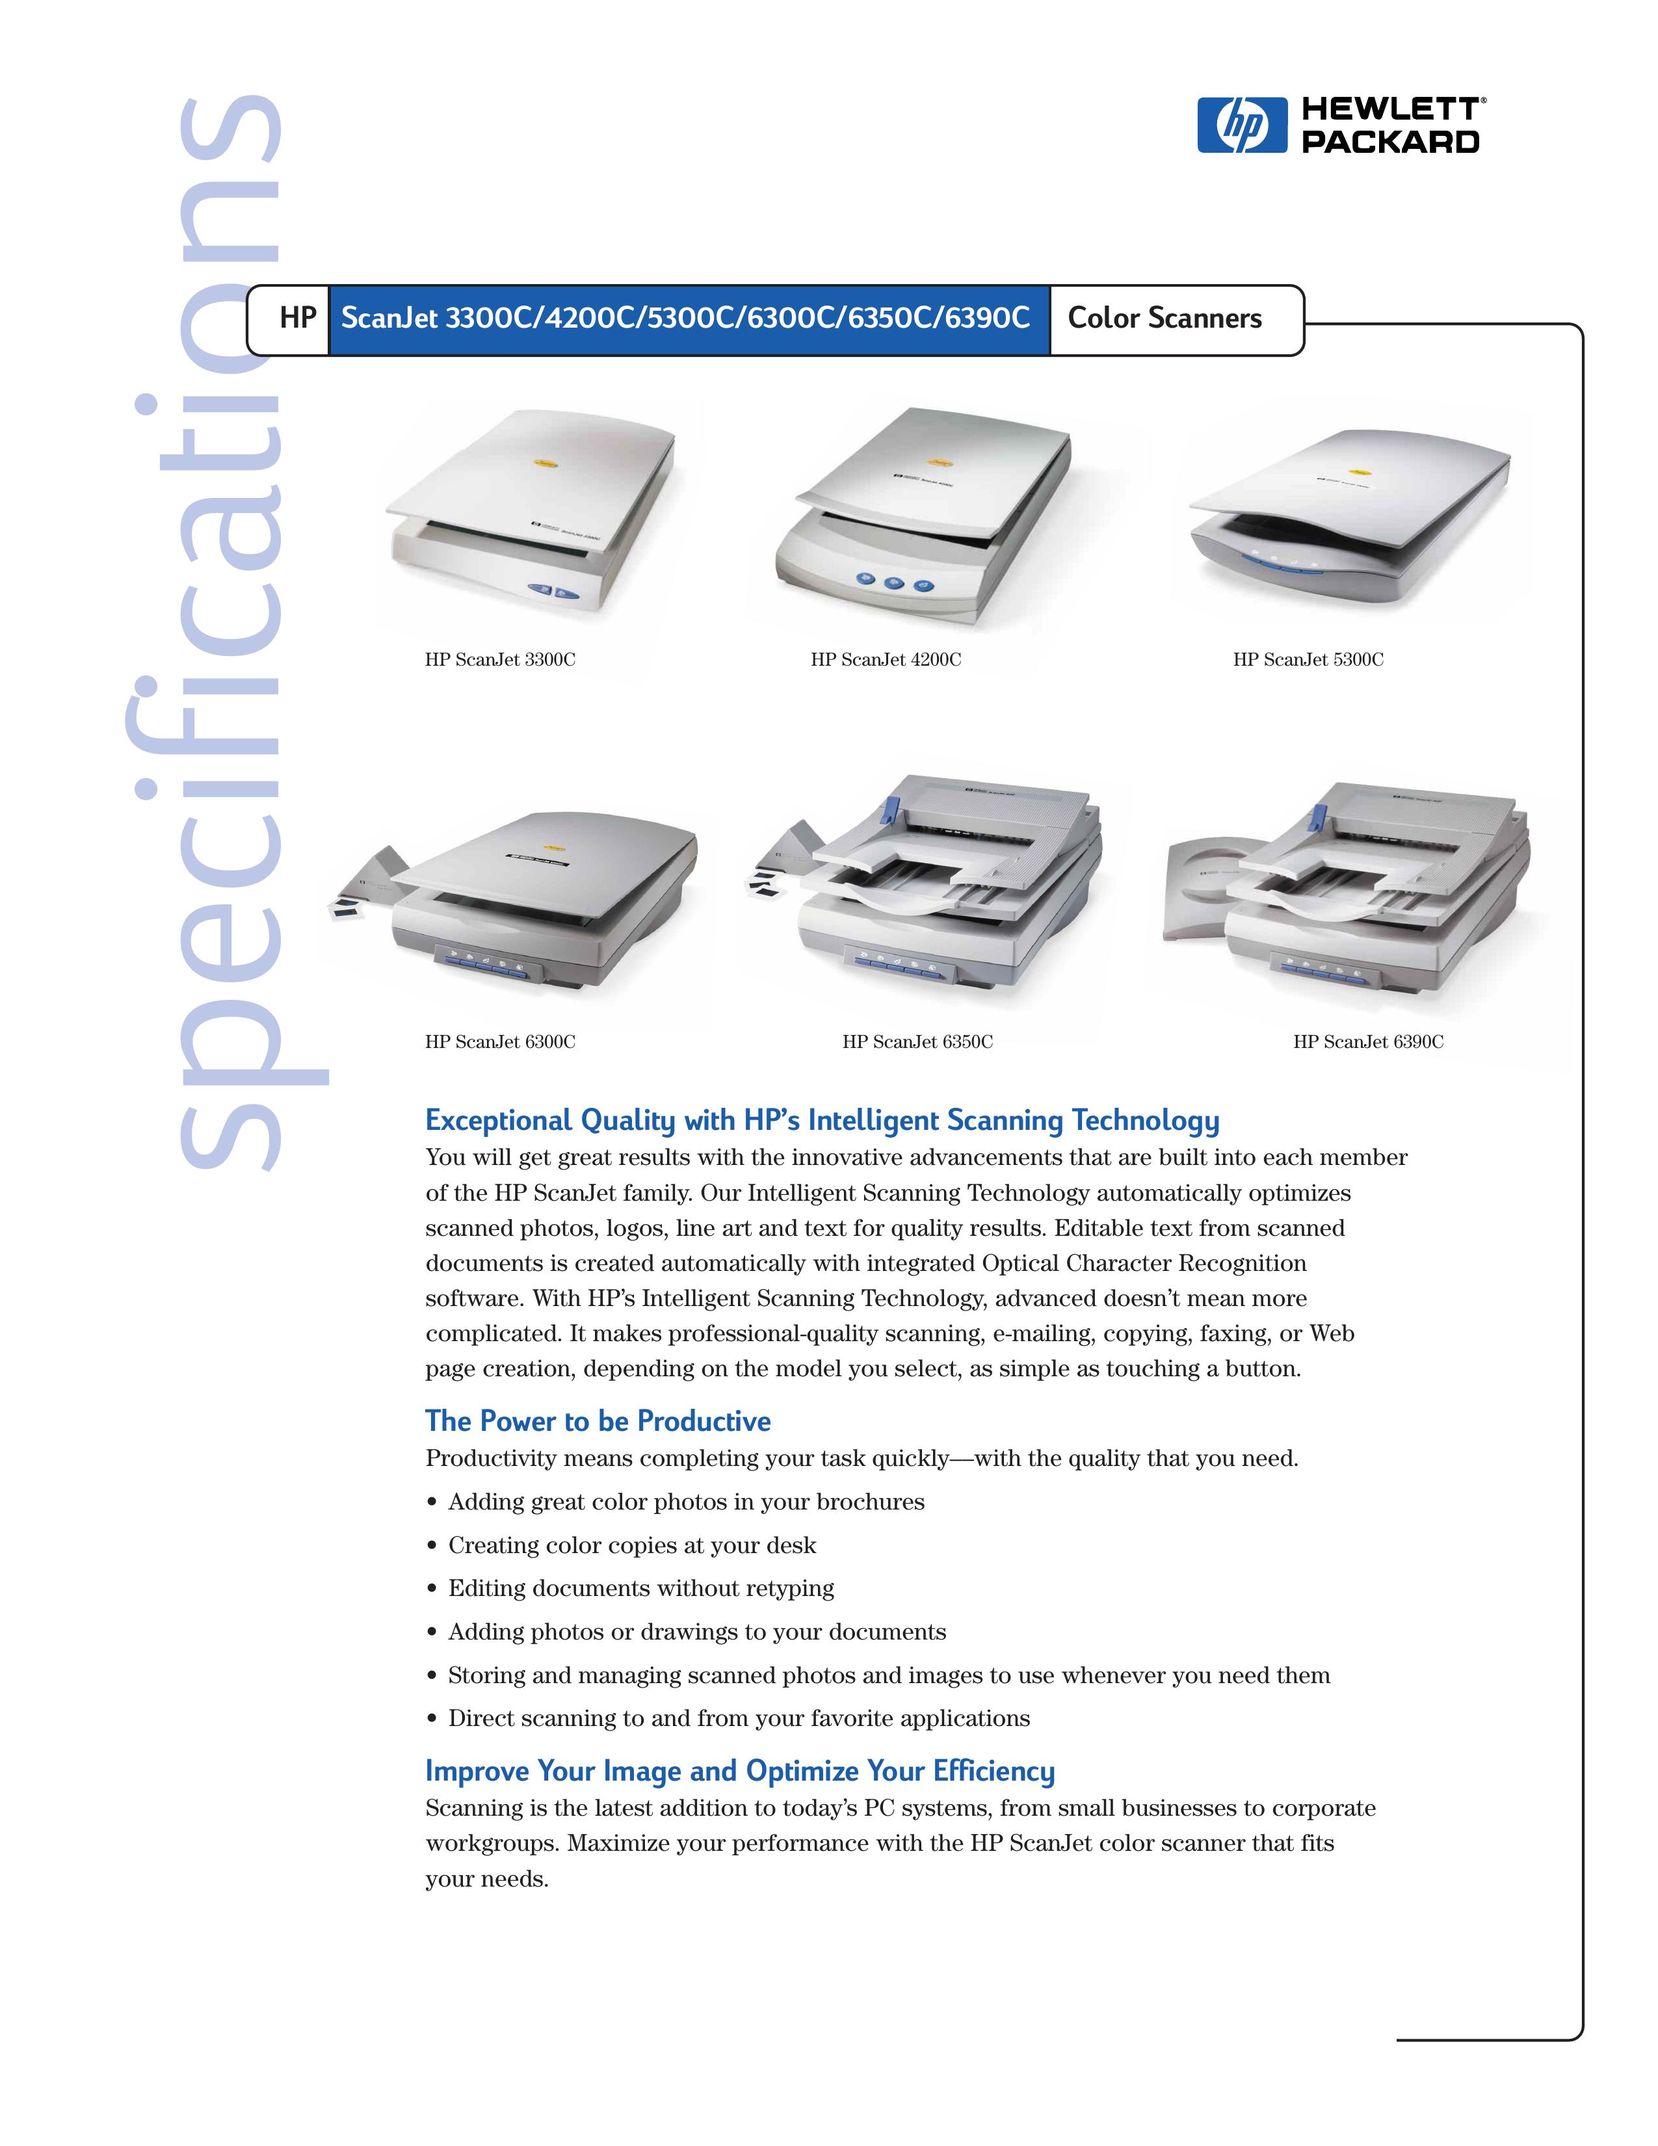 HP (Hewlett-Packard) 6350C Scanner User Manual